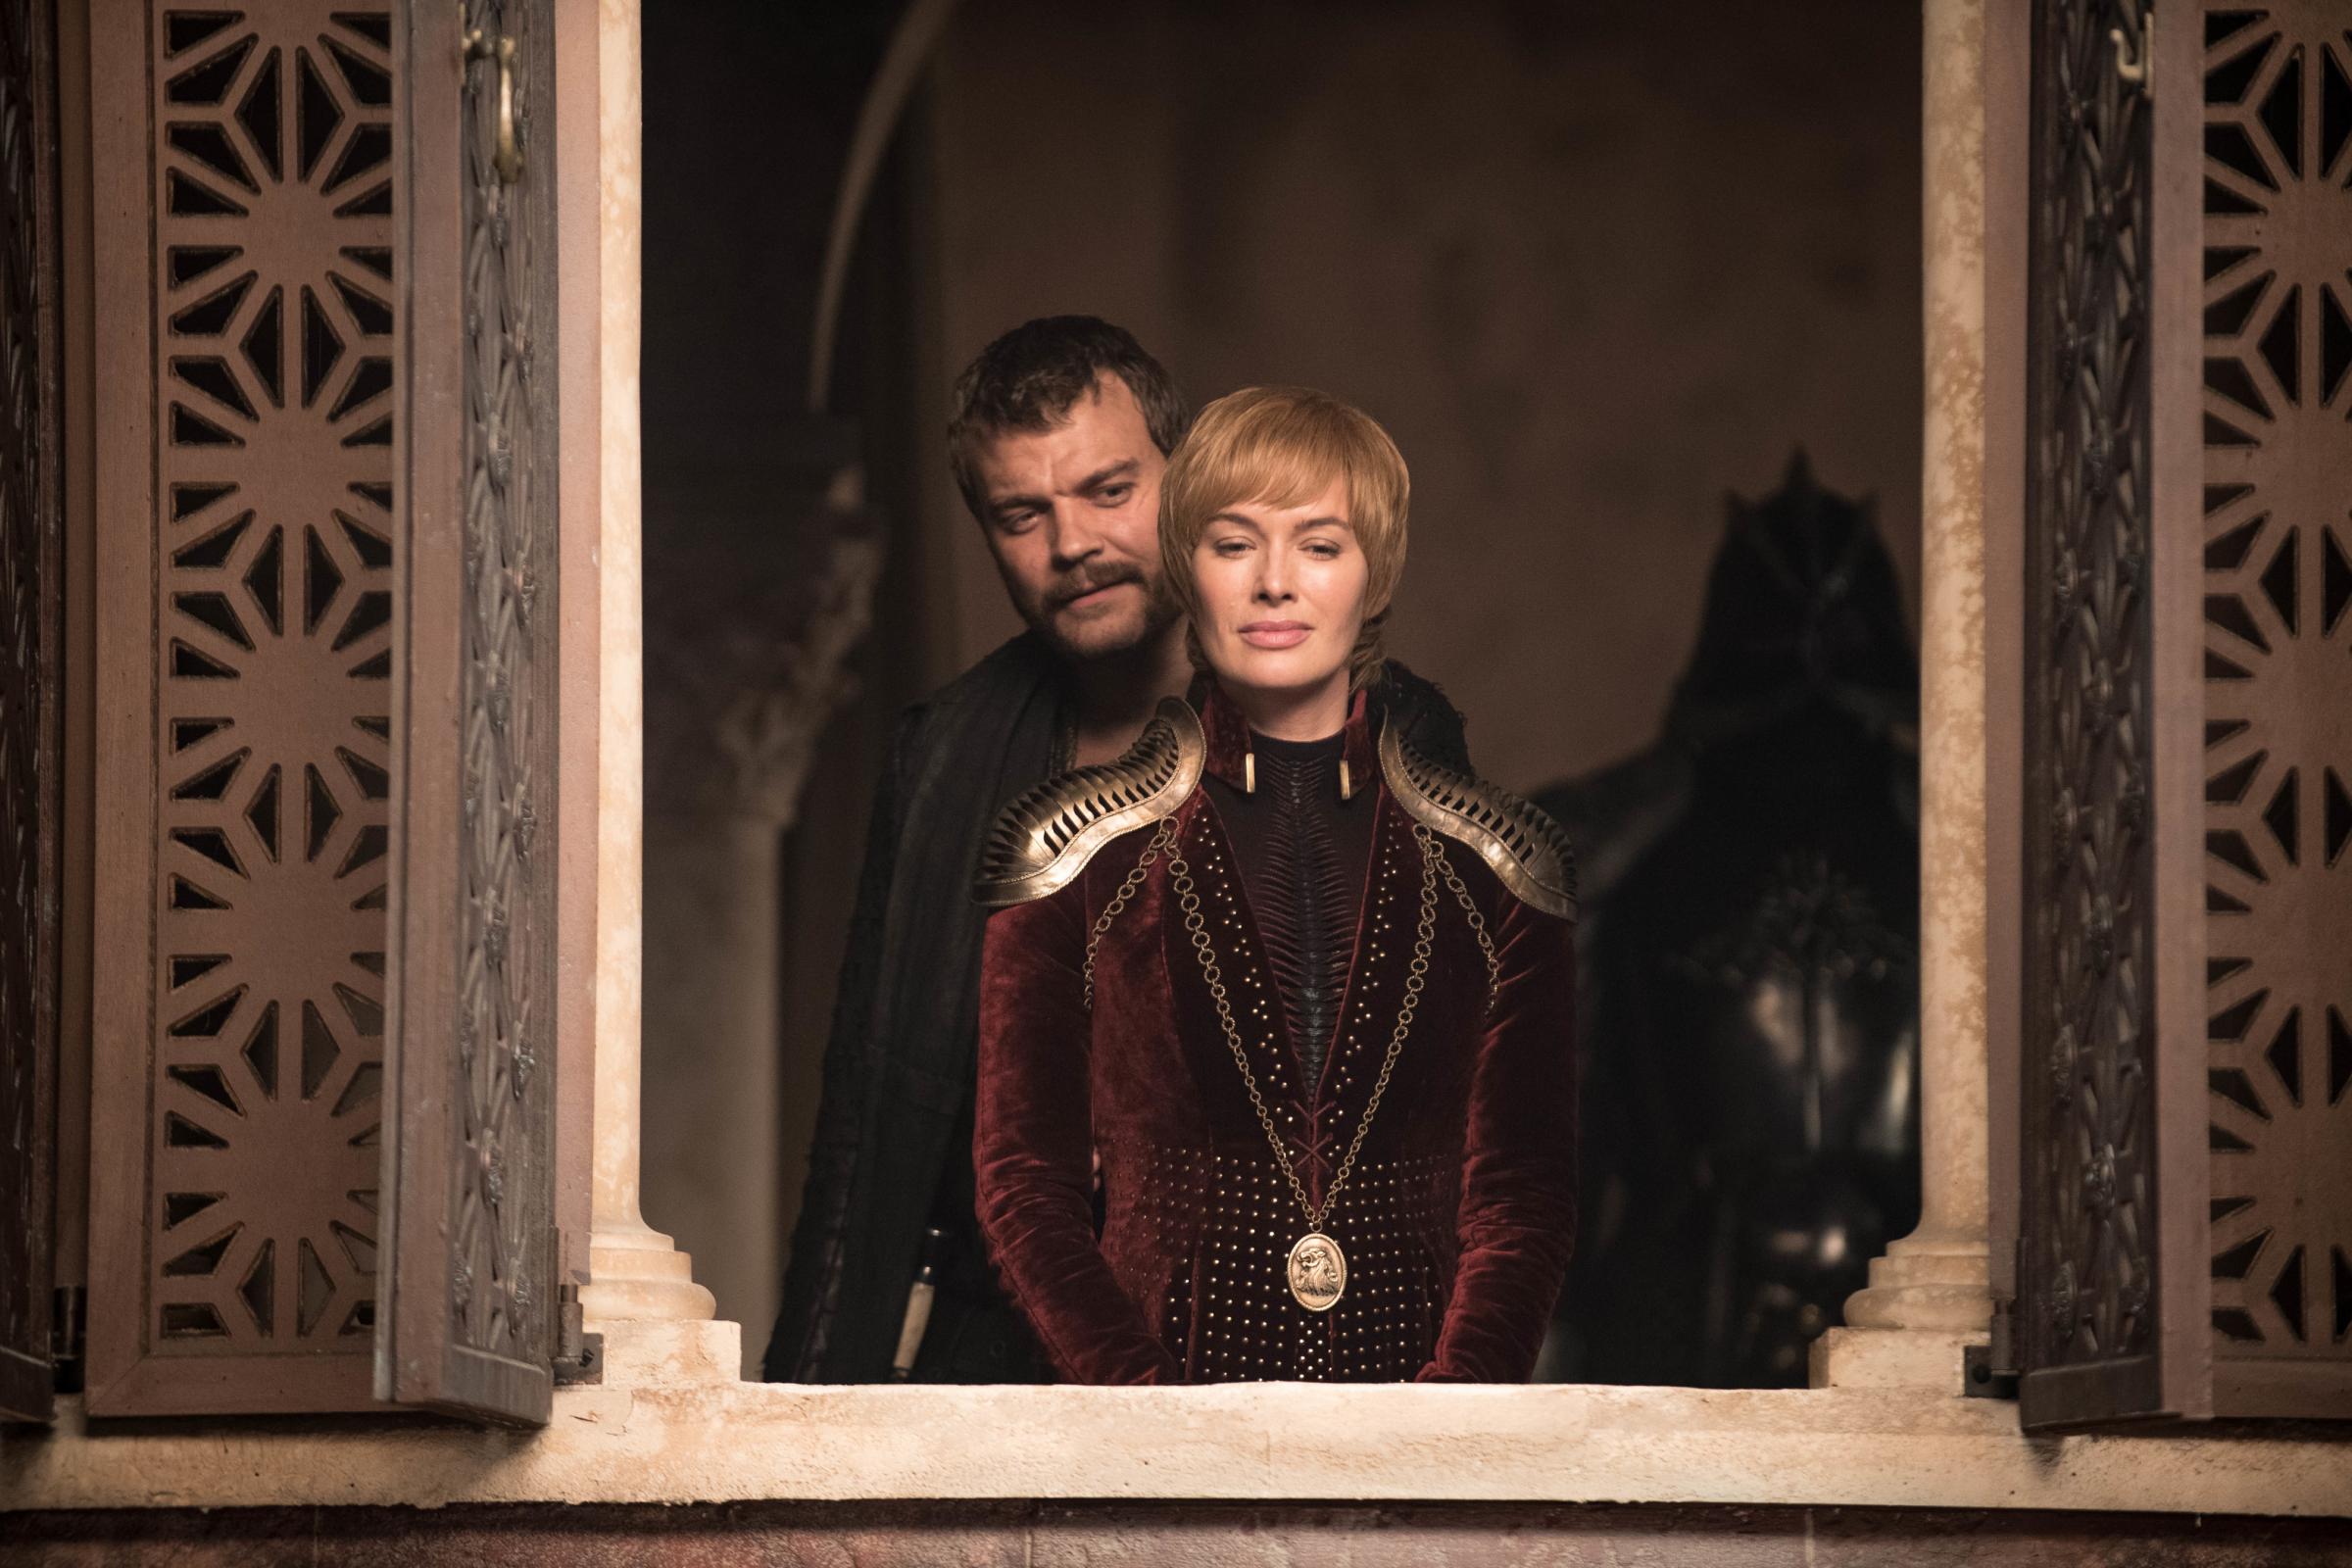 Pilou Asbæk as Euron Greyjoy and Lena Headey as Cersei Lannister.